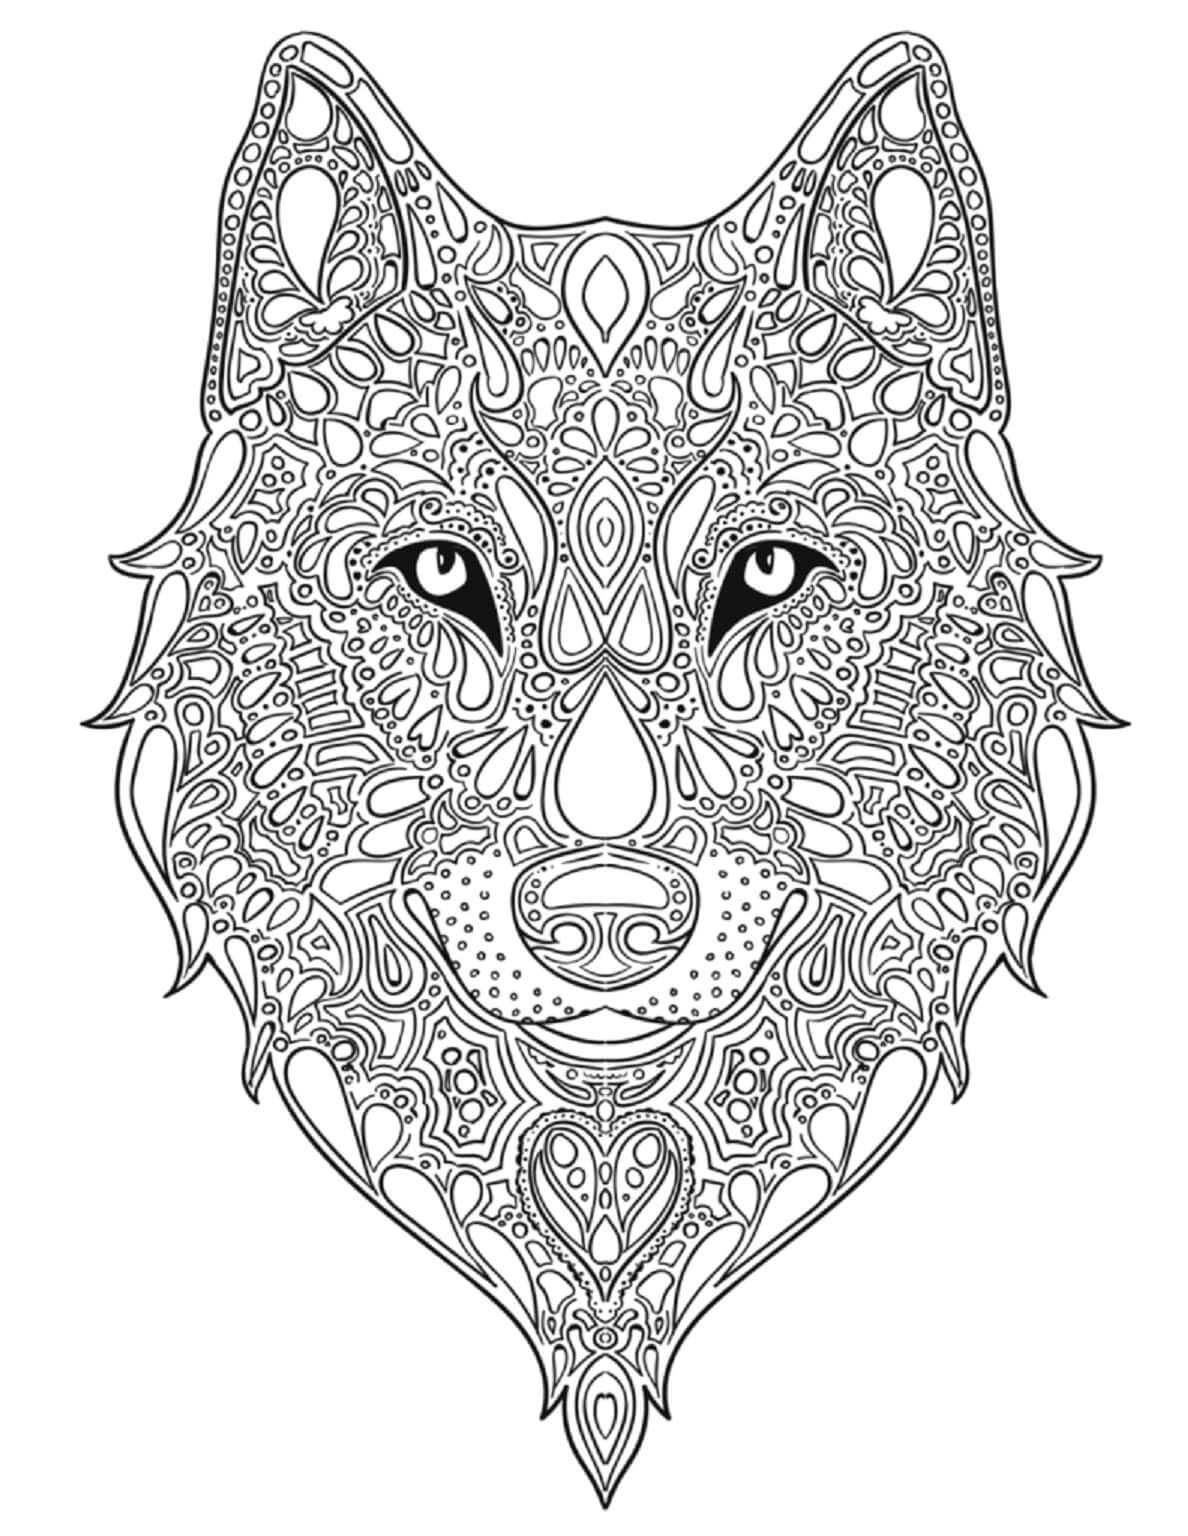 Mandala Wolf Coloring Page - Sheet 3 Mandalas